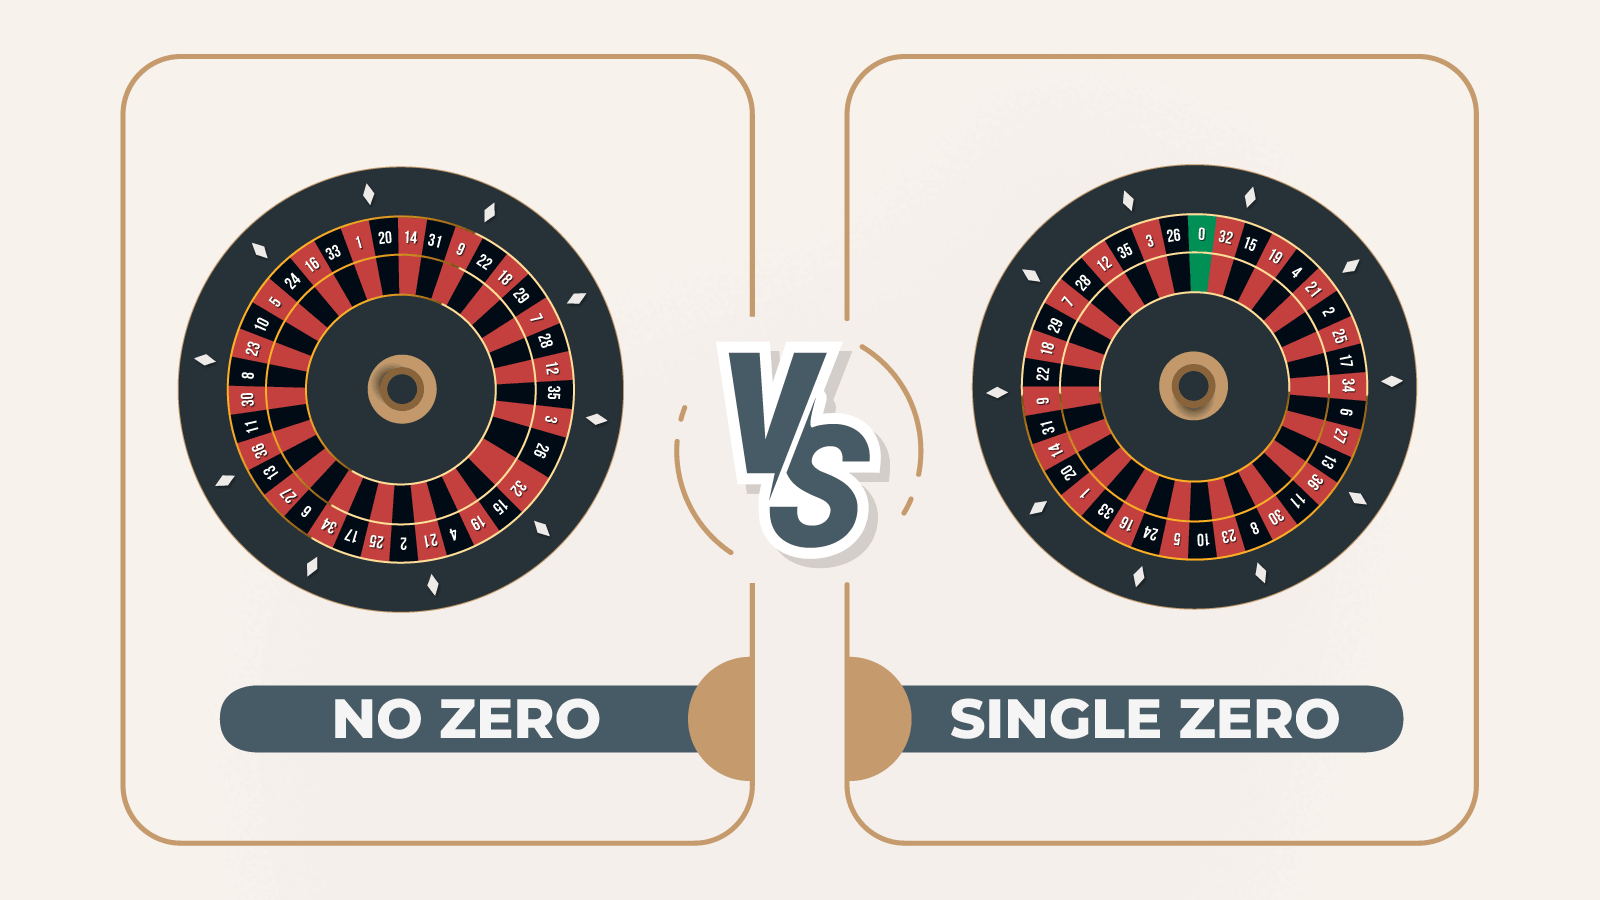 Should You Play No Zero or Single Zero Roulette